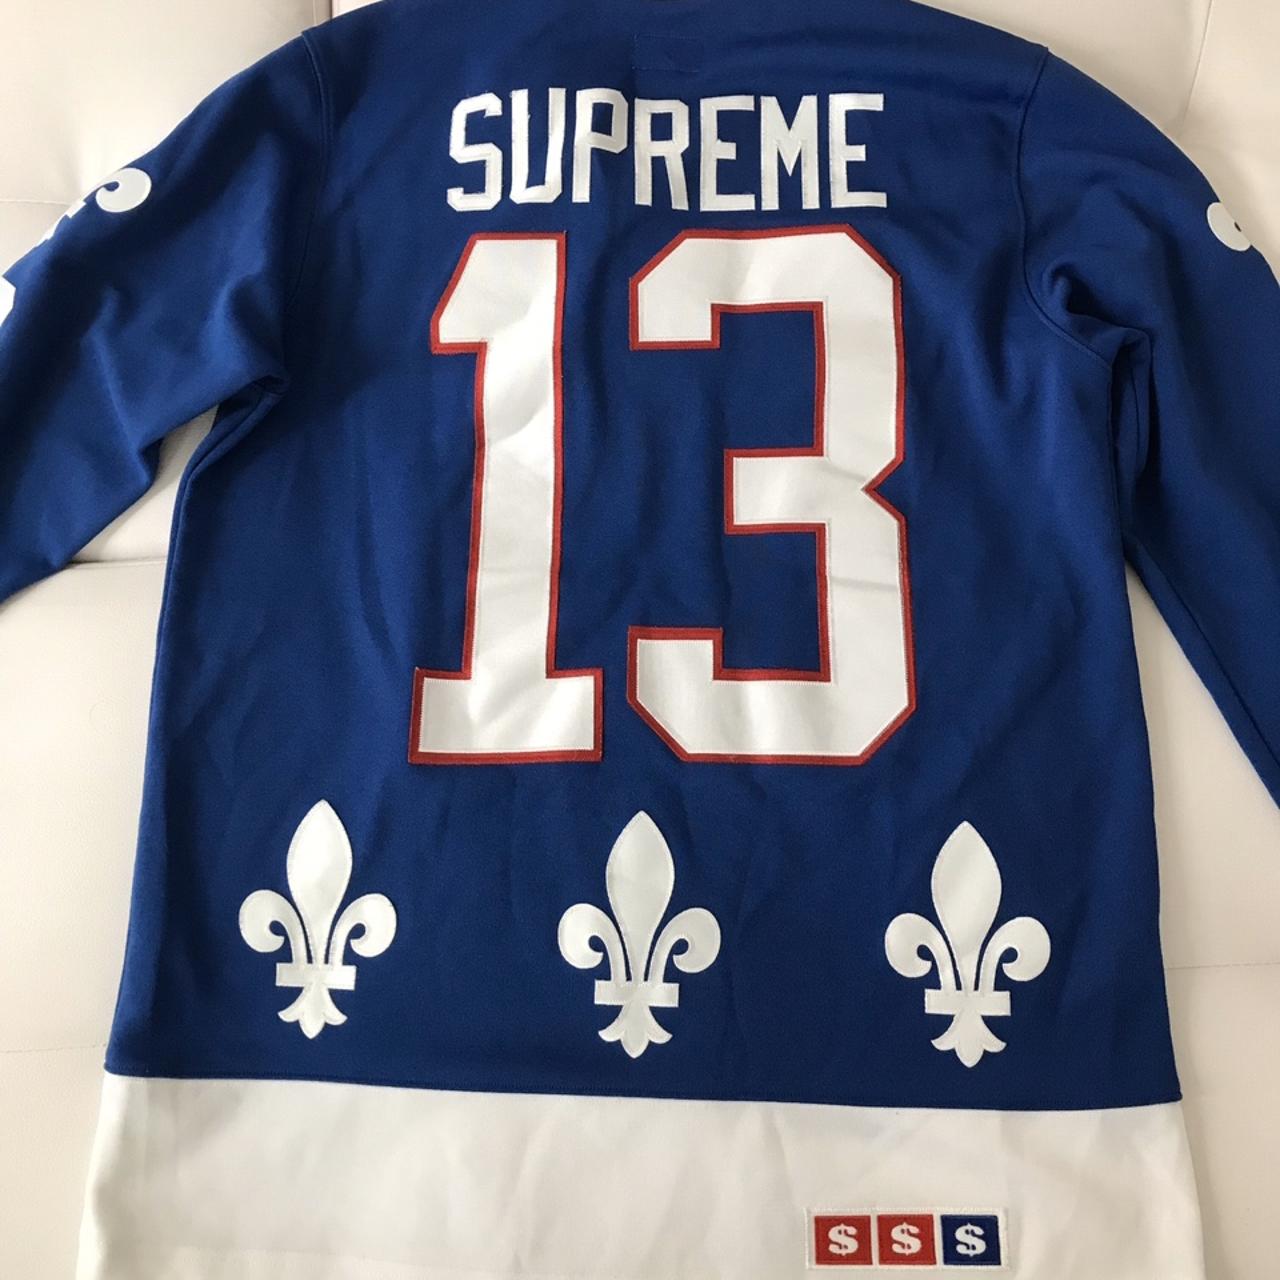 SUPREME FLEUR DE LIS , Hockey Jersey in Blue, Perfect...